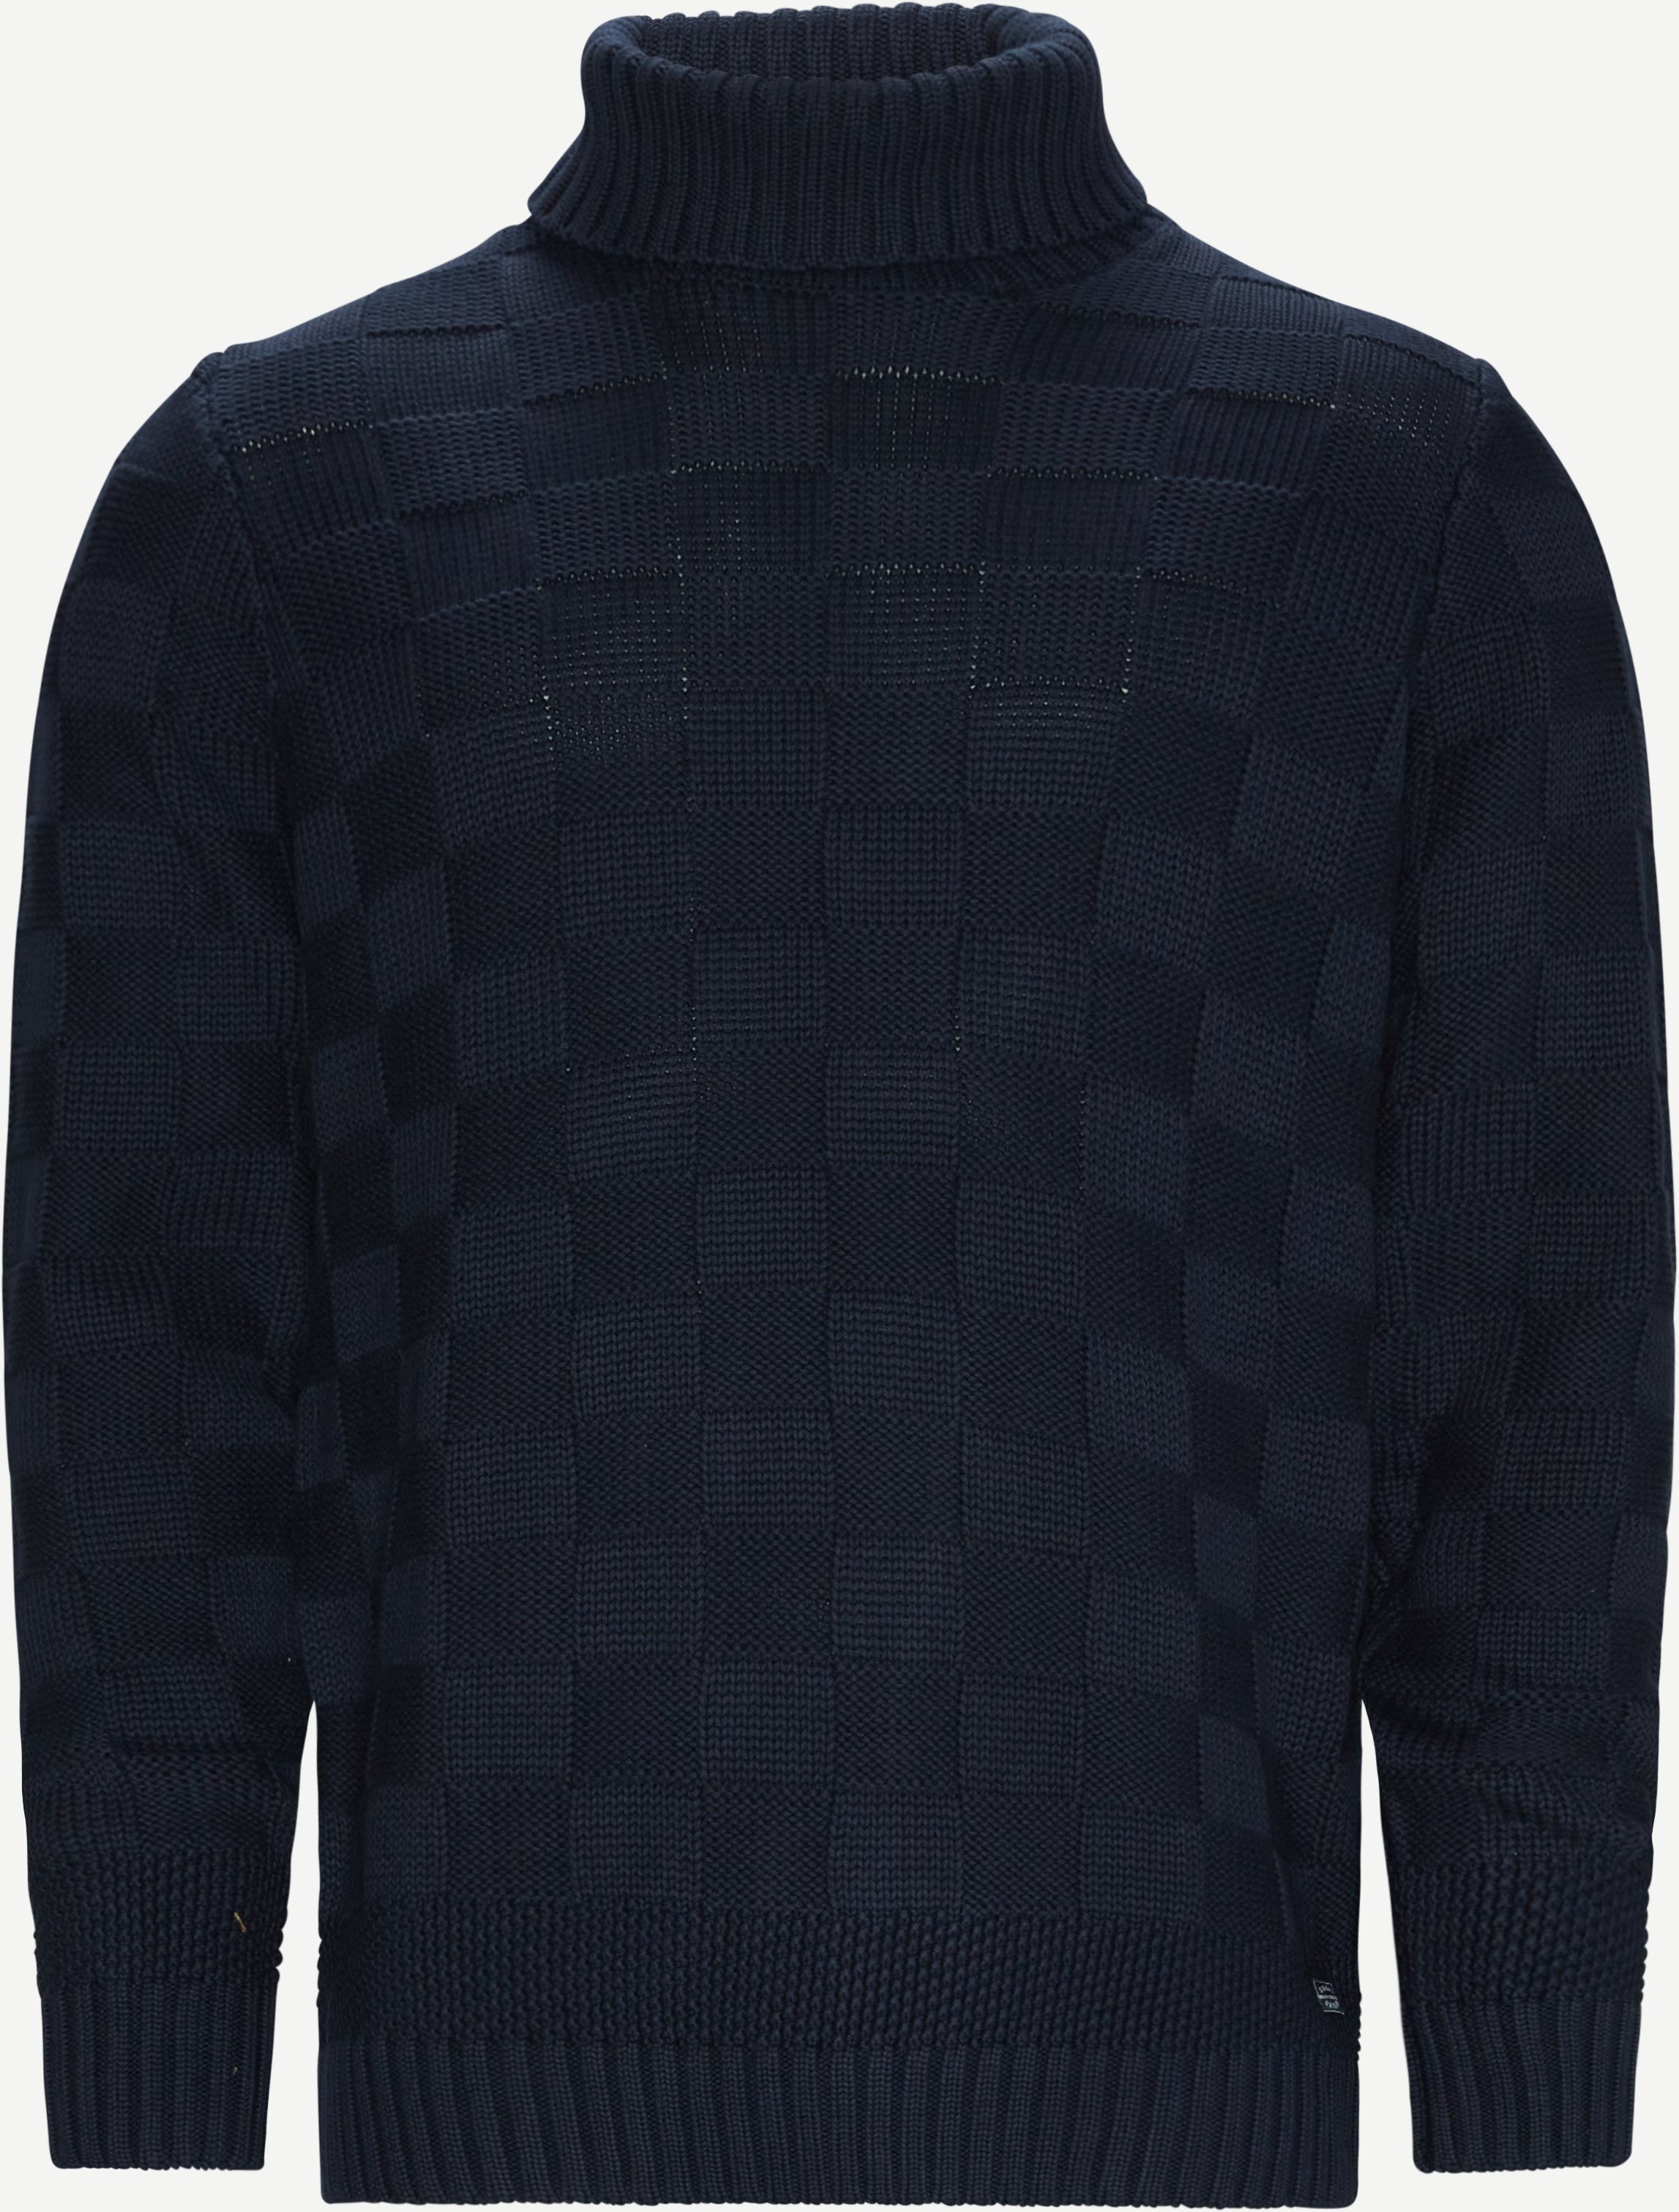 Willis Square Knit - Knitwear - Regular fit - Blue